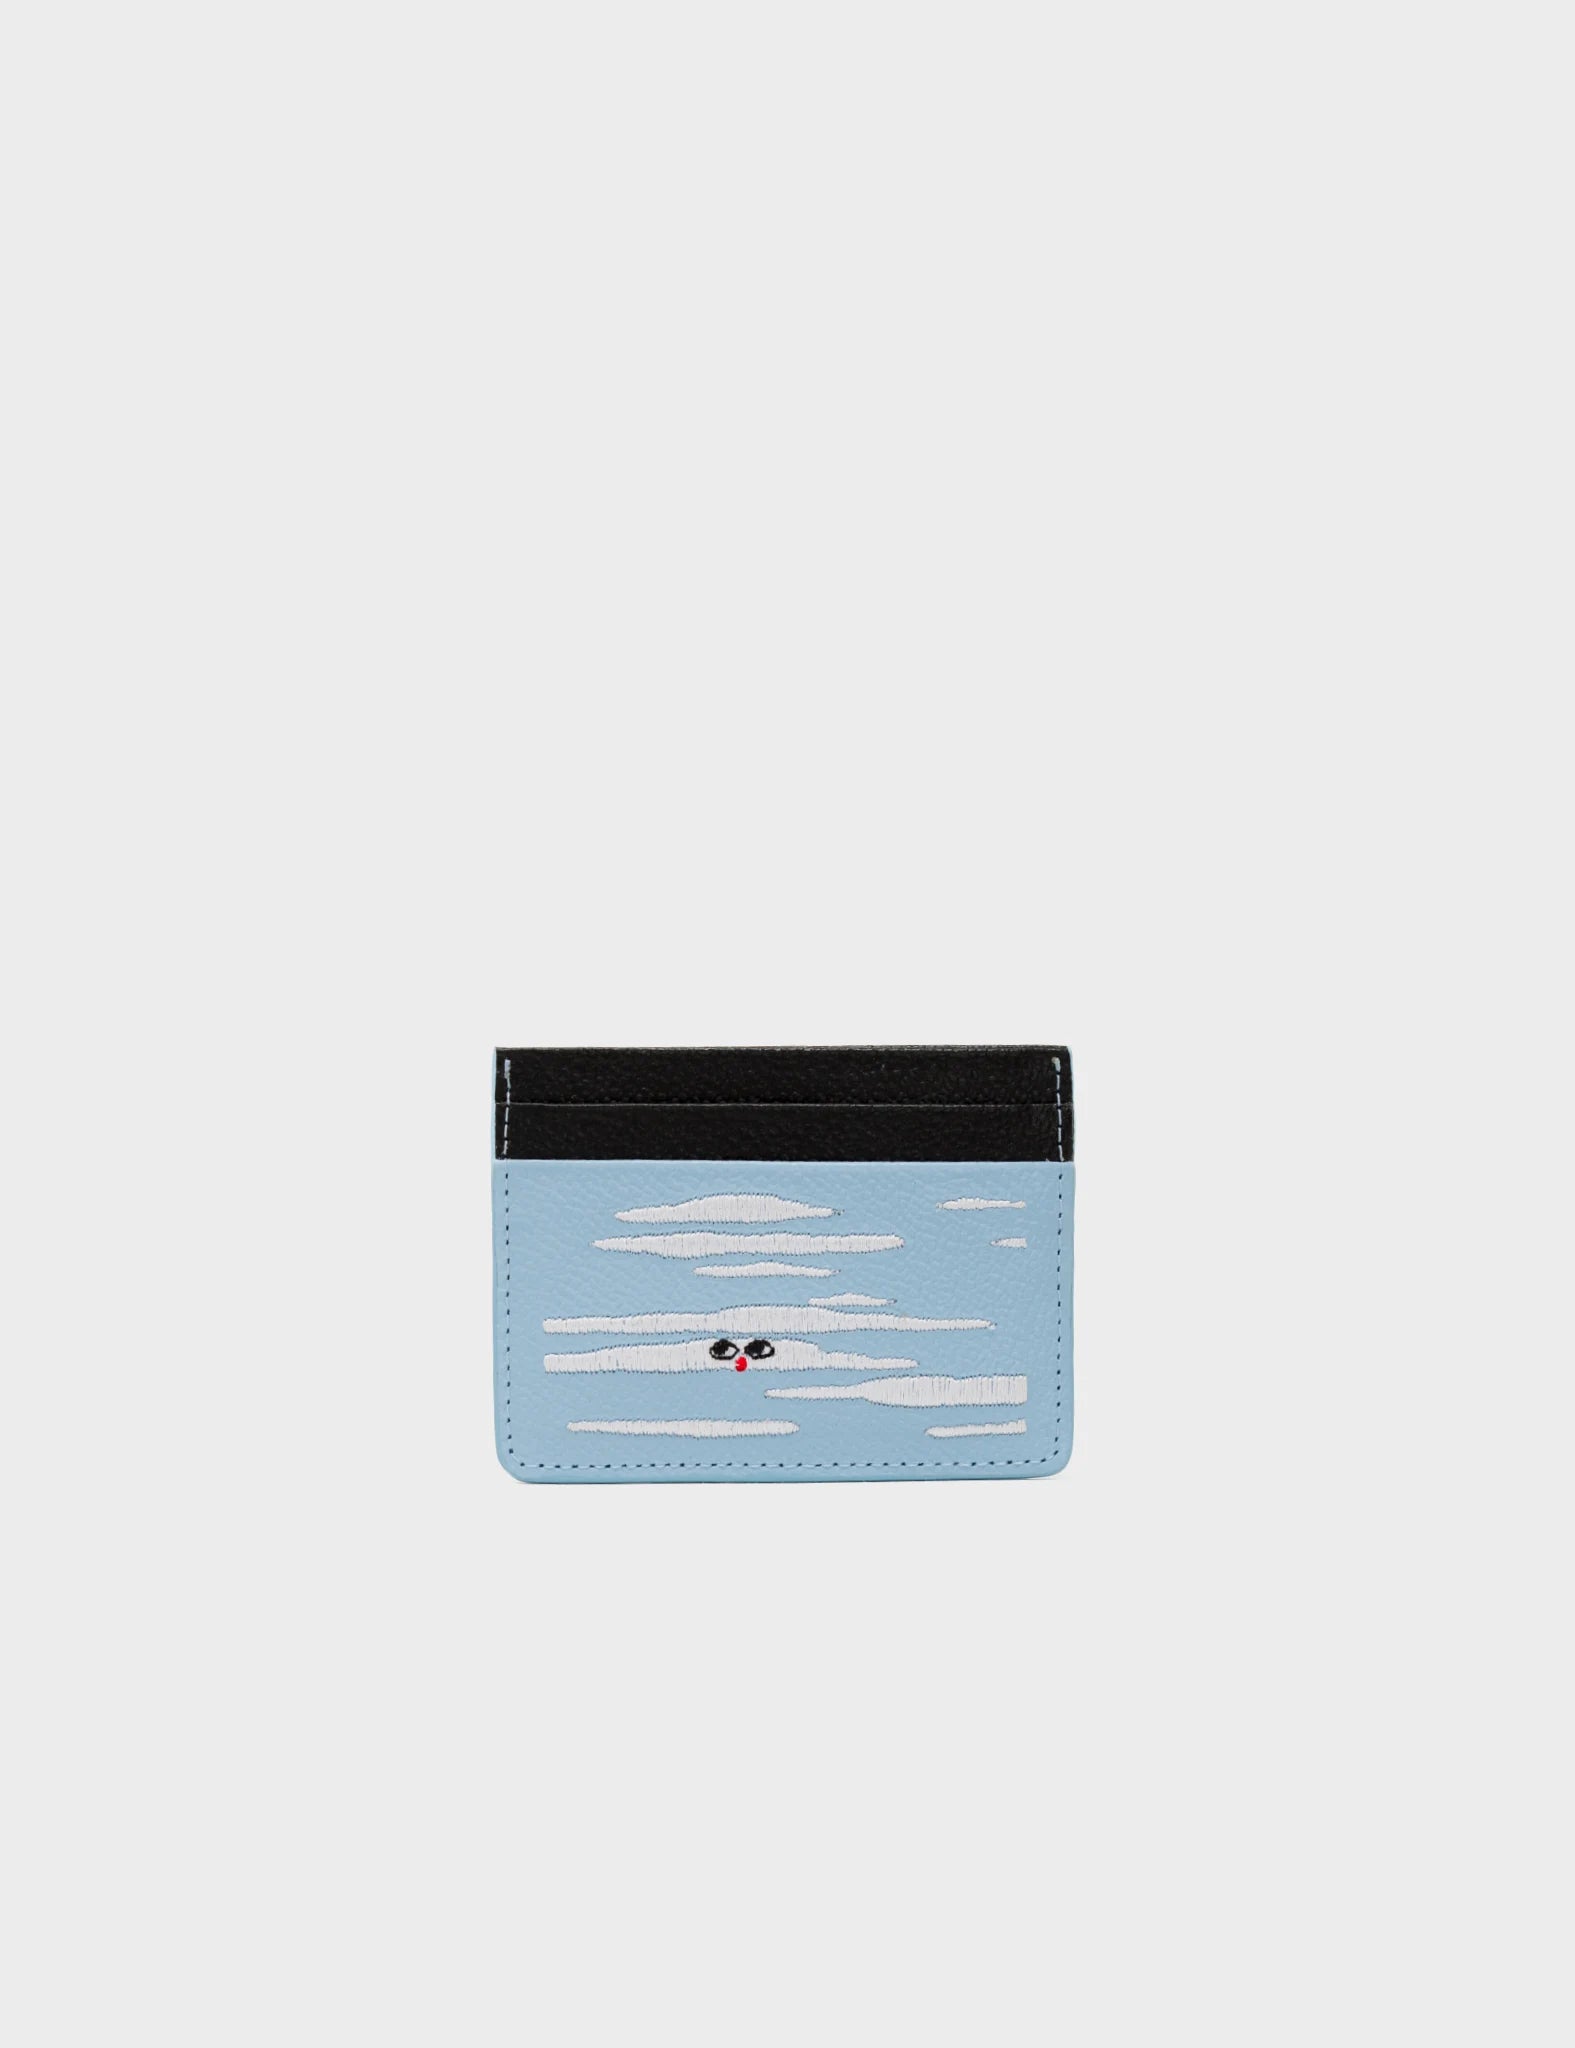 Wallet Splish Splash Blue And Black Leather Cardholder - Clouds Embroidery